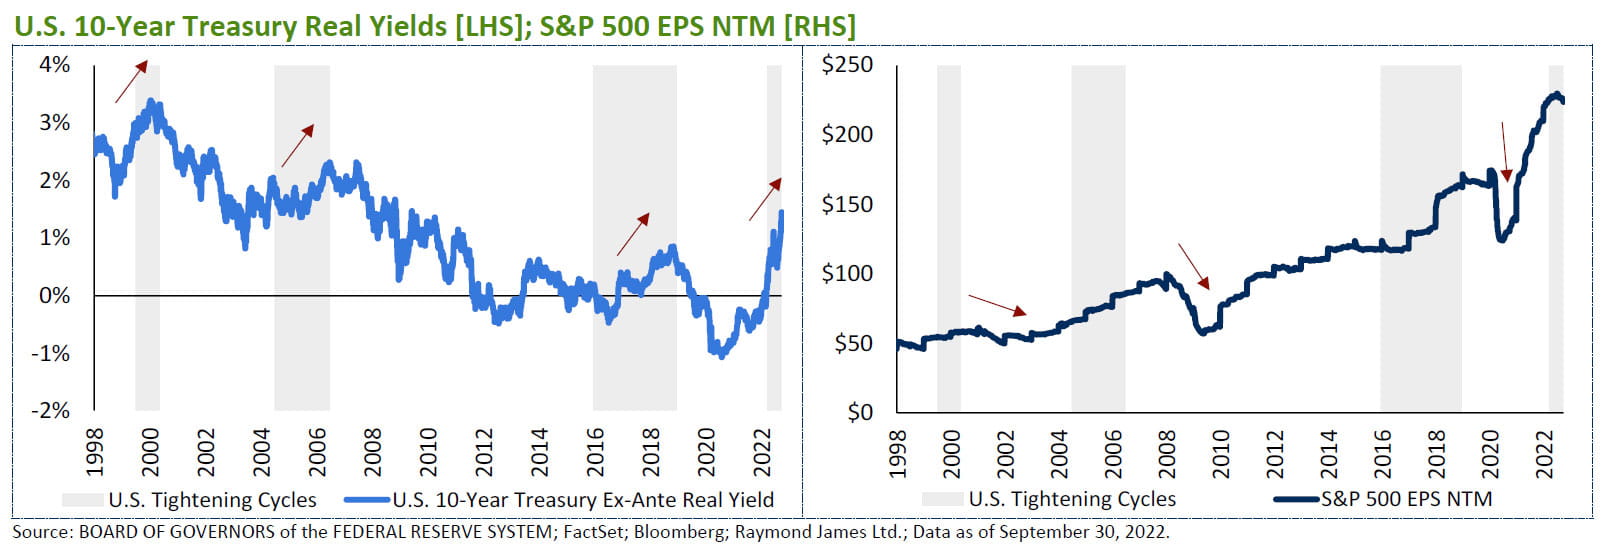 U.S. 10-Year Treasury Real Yields [LHS]; S&P 500 EPS NTM [RHS]